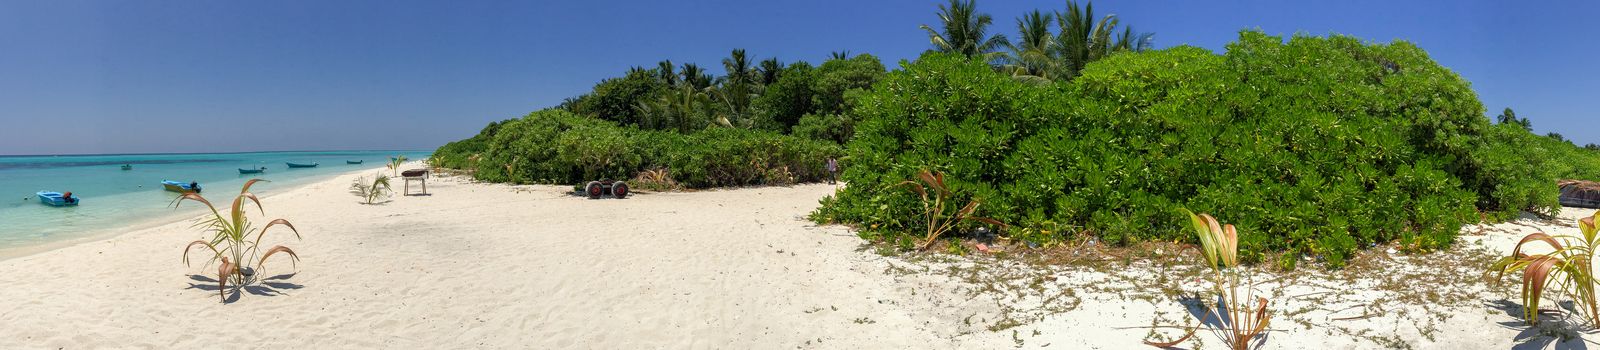 Vegetation of Maldive Islands.